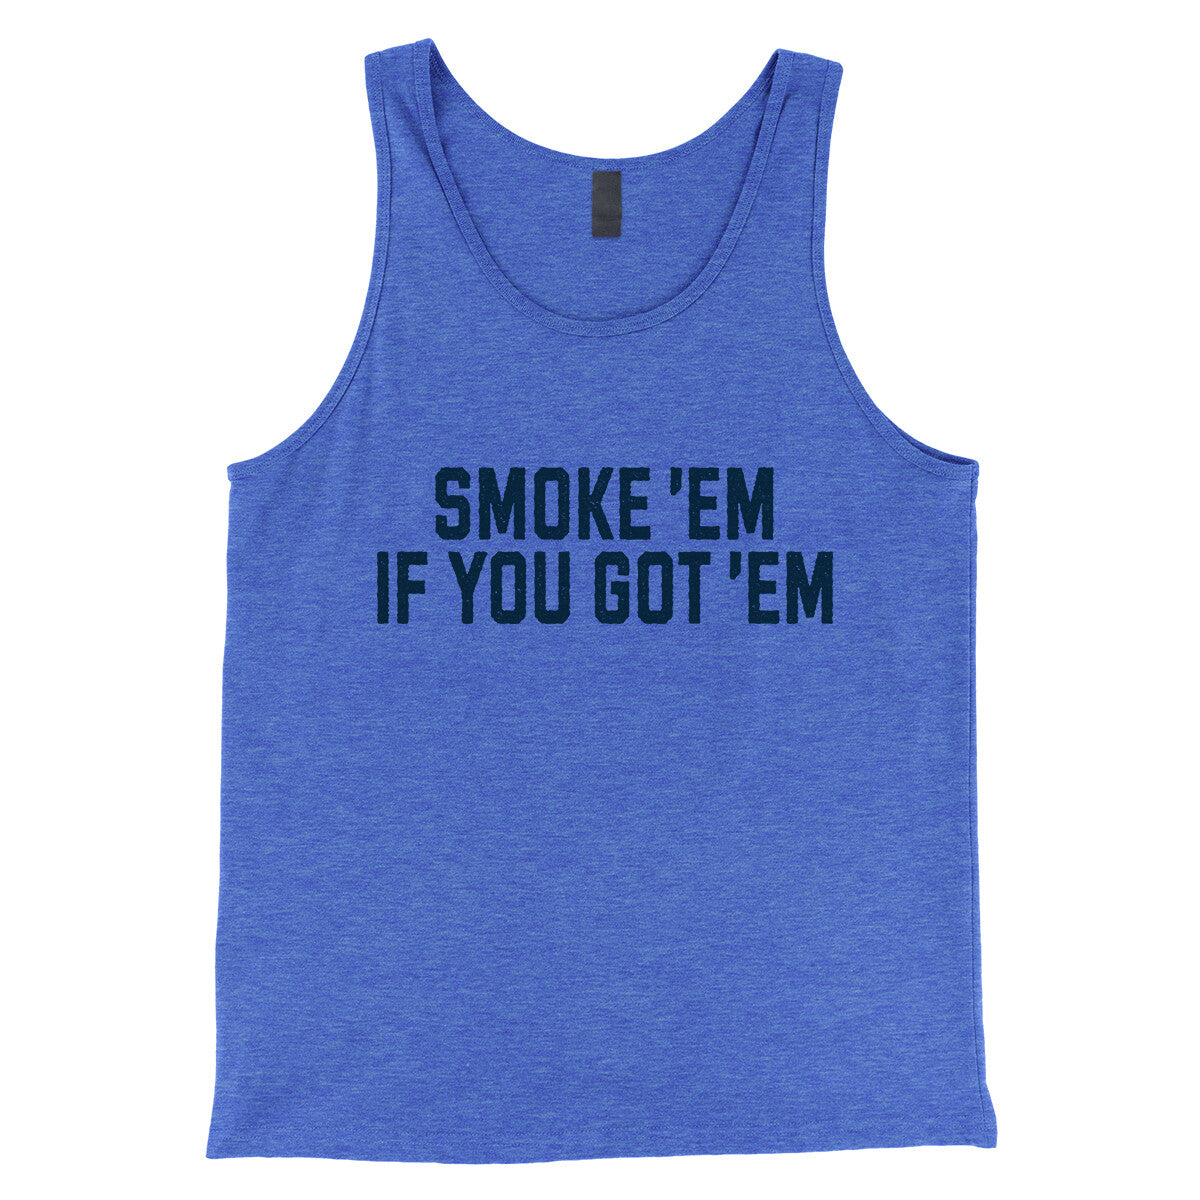 Smoke ‘em If you Got ‘em in True Royal TriBlend Color